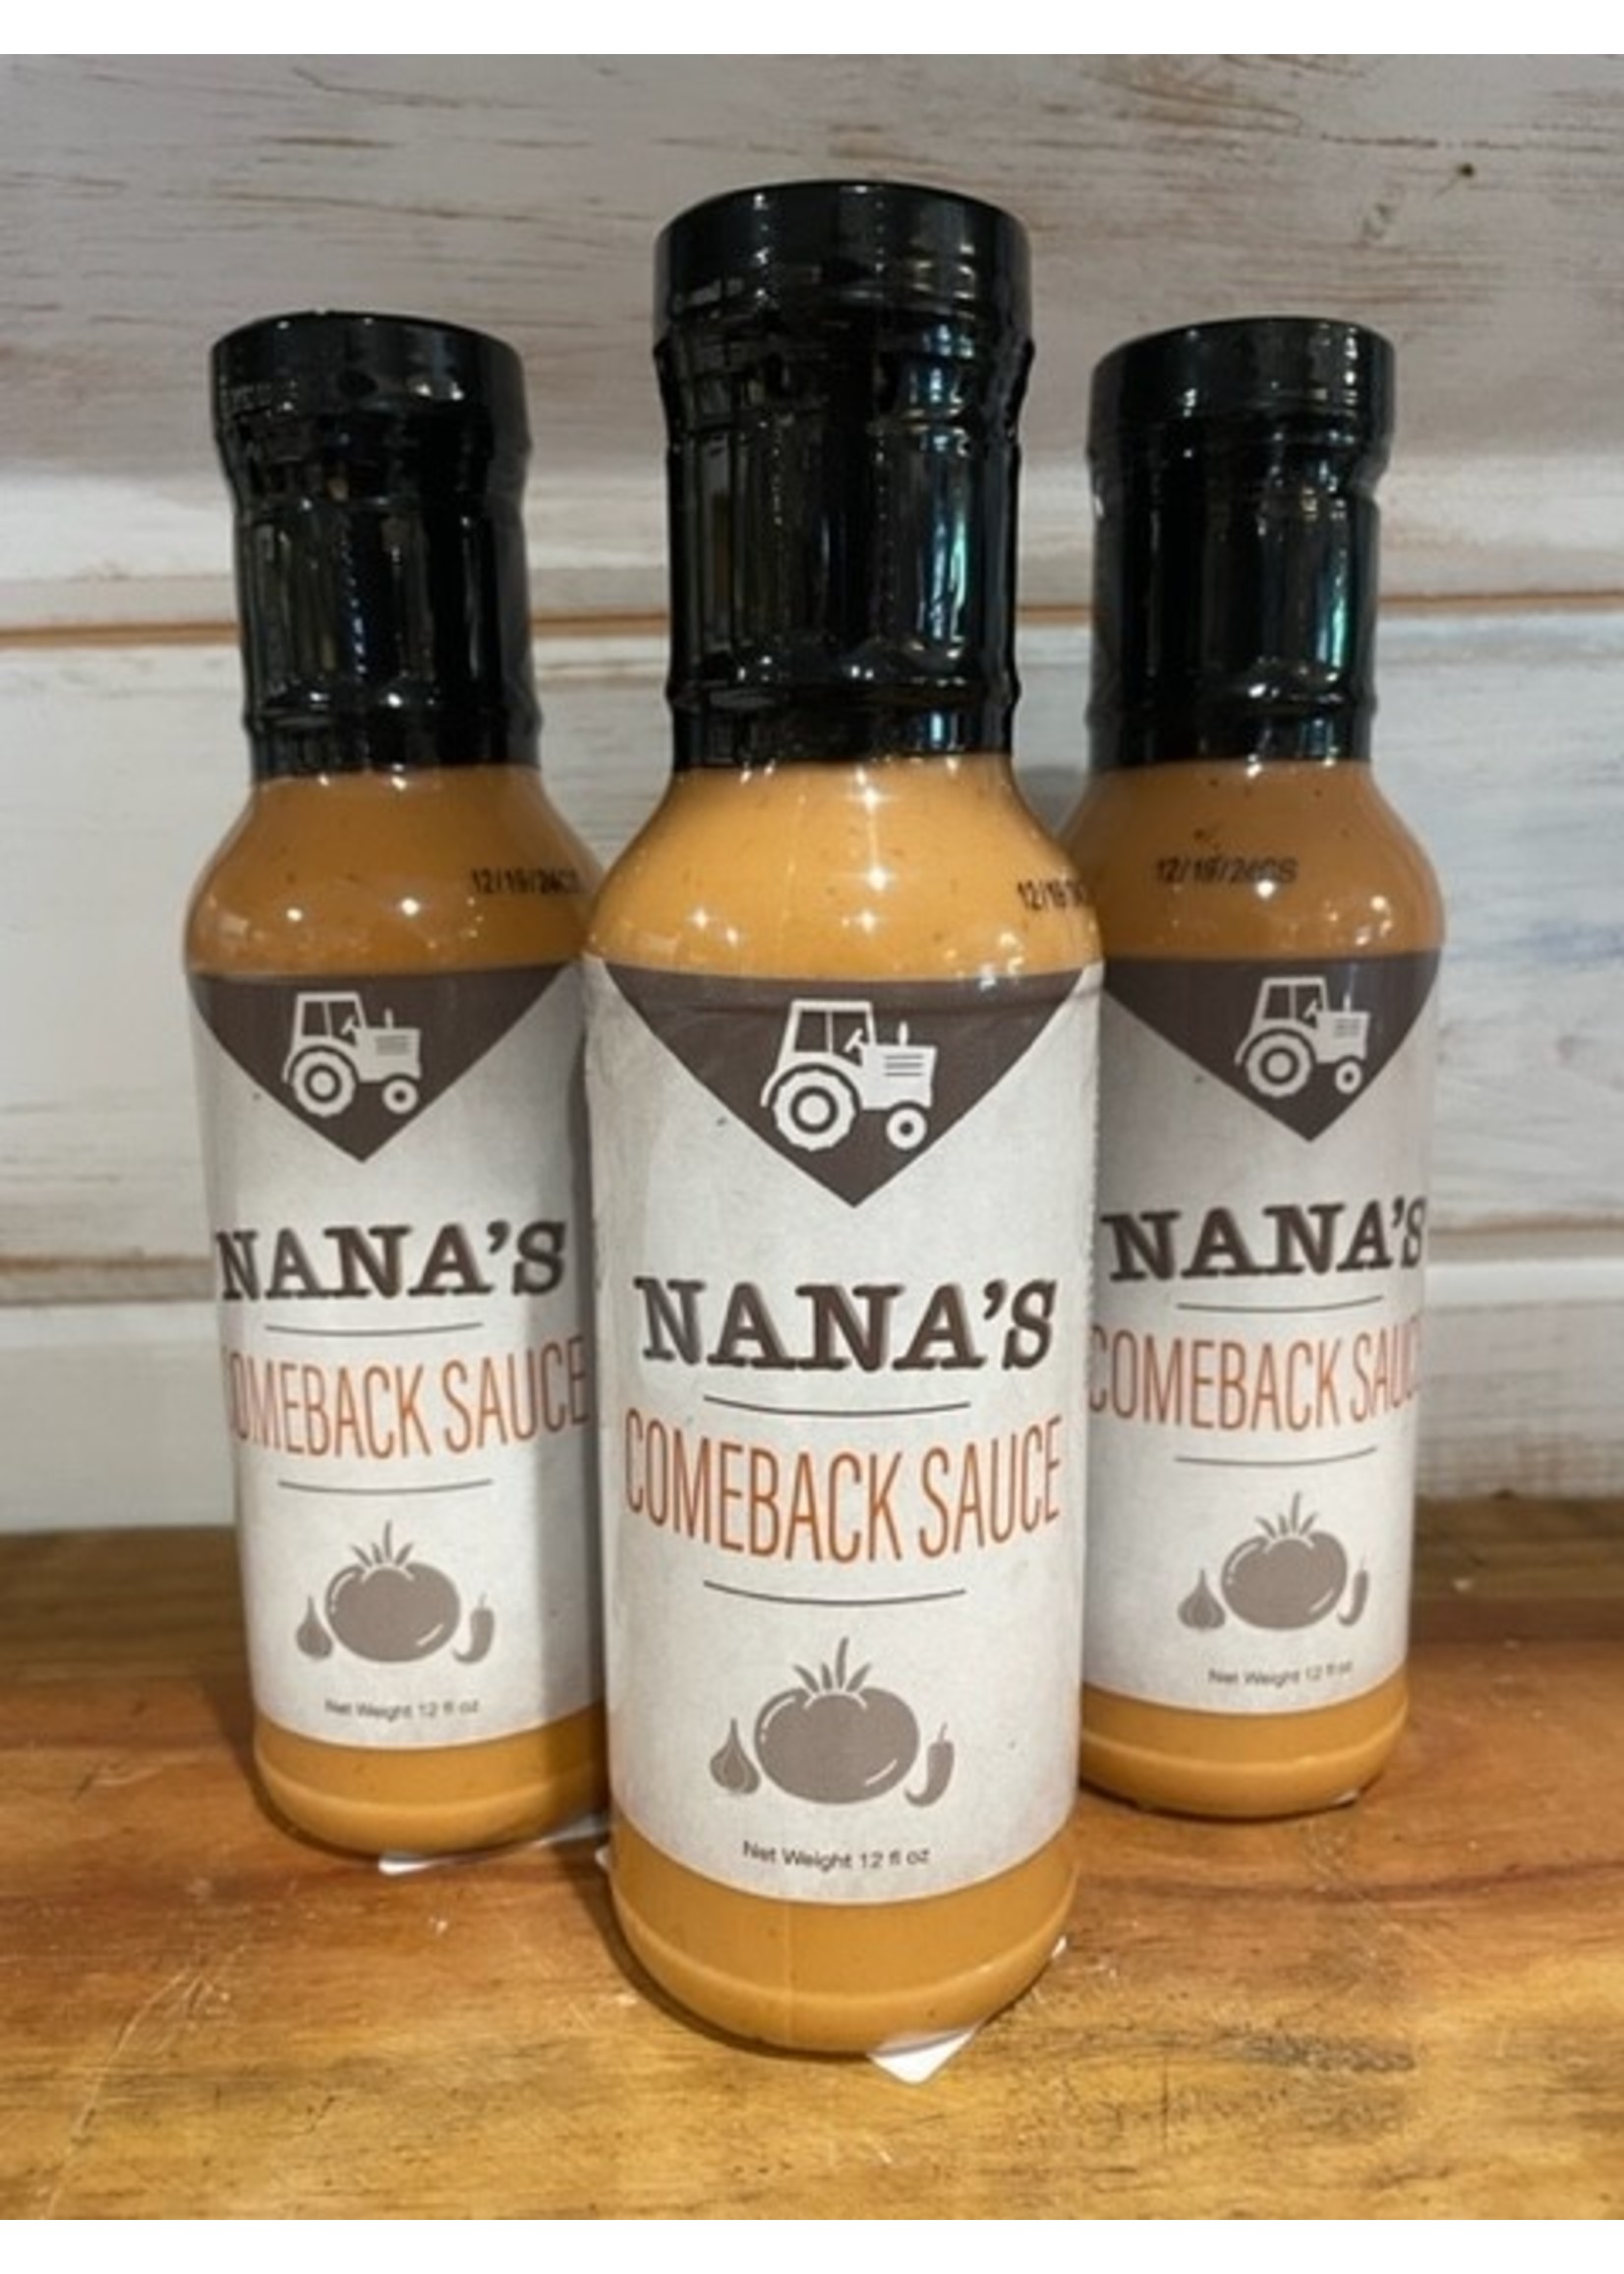 Nana's Comeback Sauce